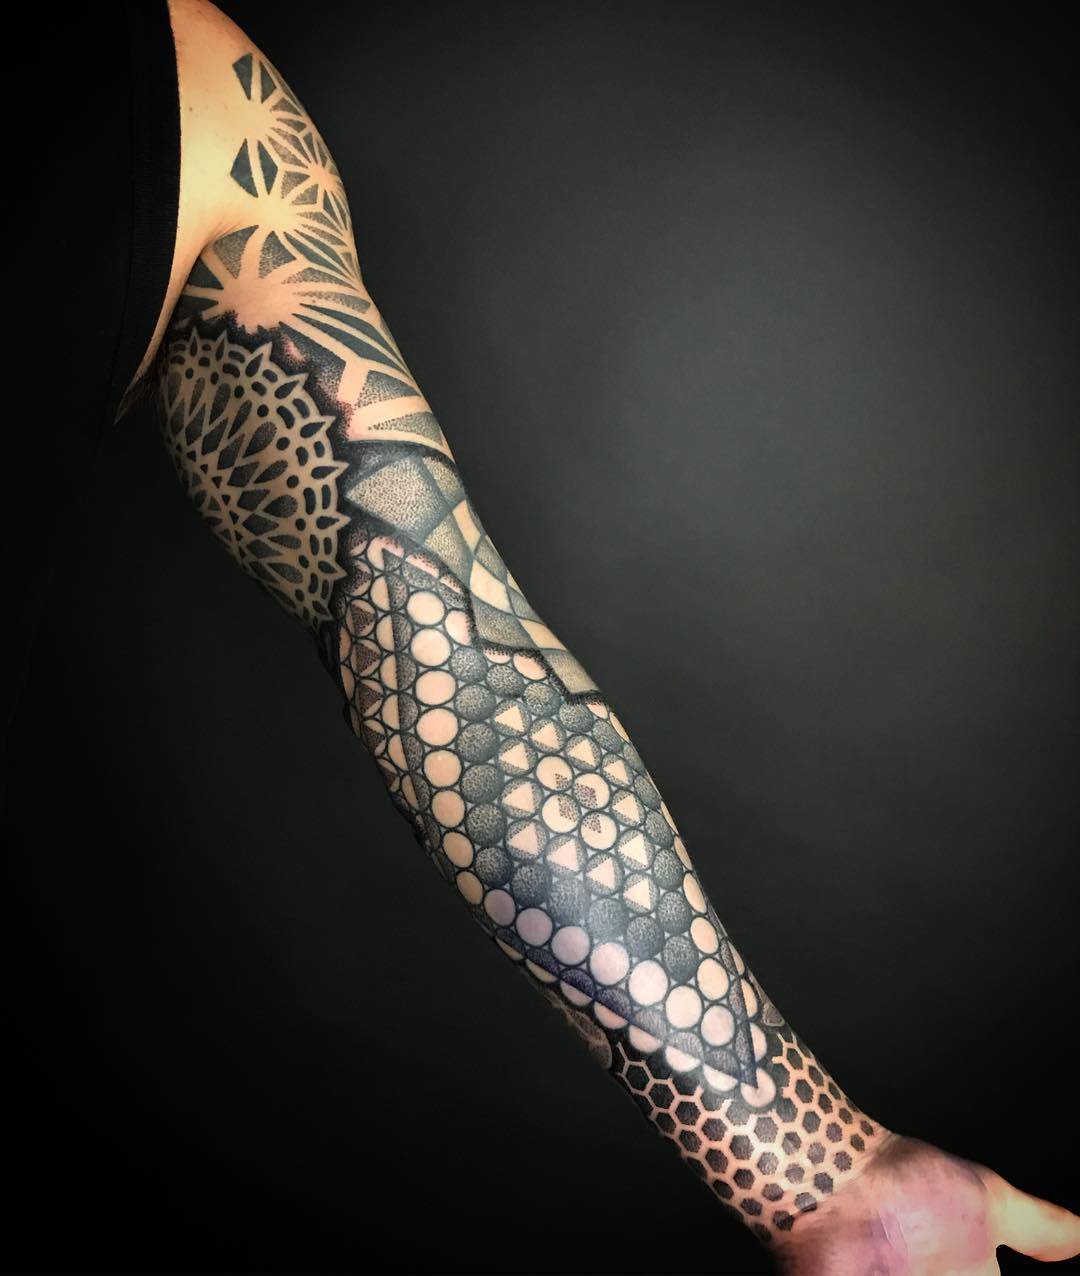 Dotwork ornamental tattoo by Deryn Twelve | iNKPPL